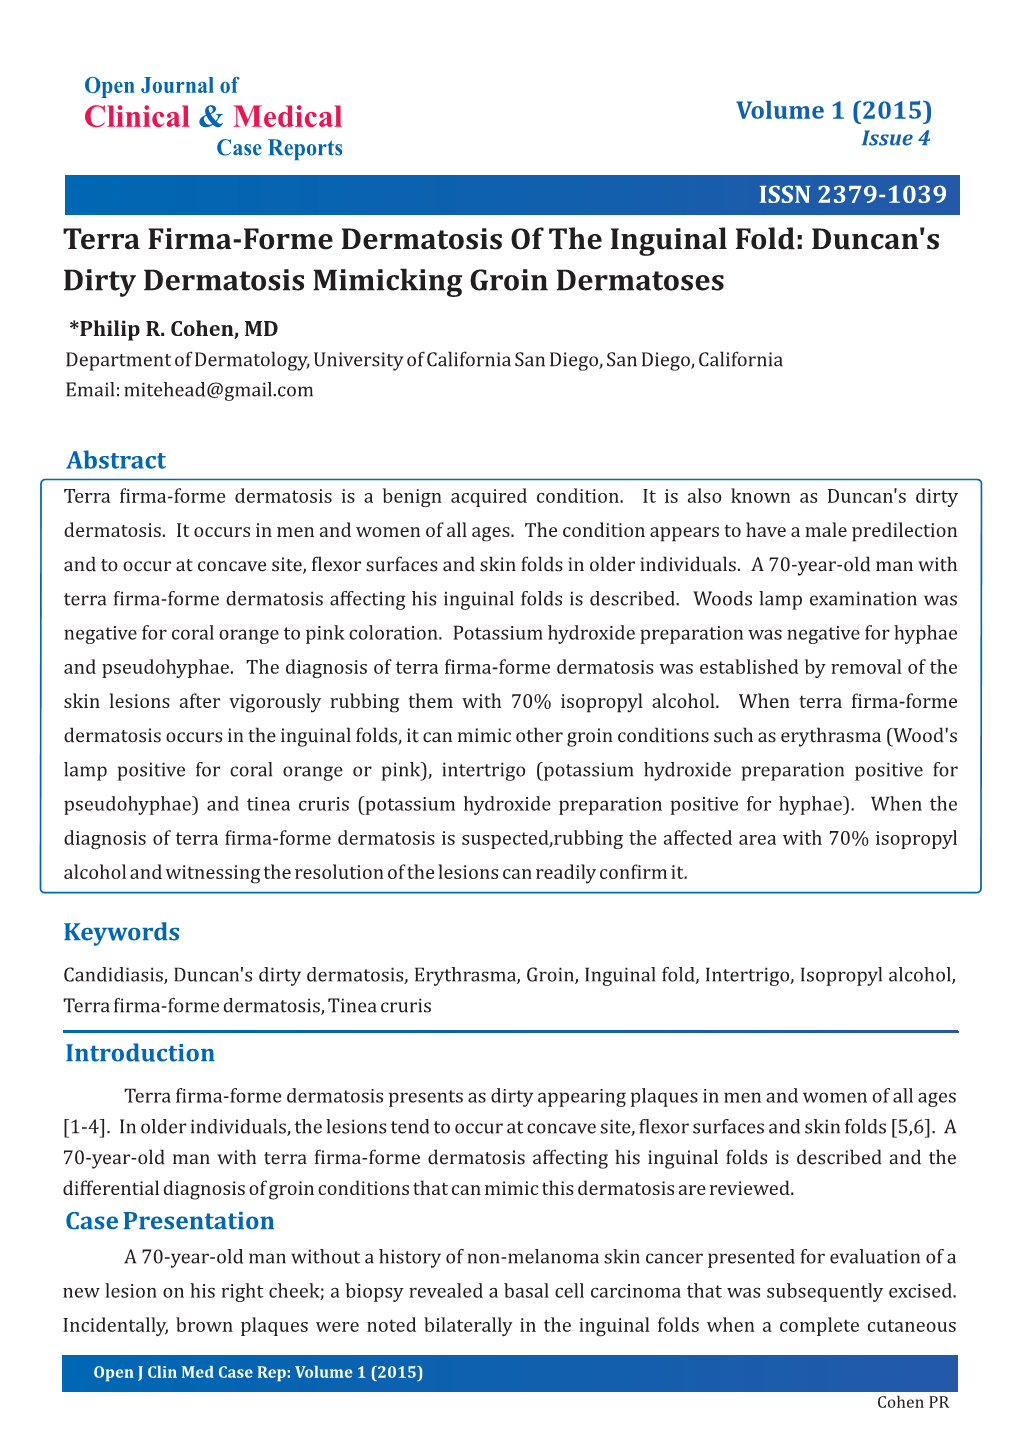 Cohen, PR: Terra Firma-Forme Dermatosis of the Inguinal Fold